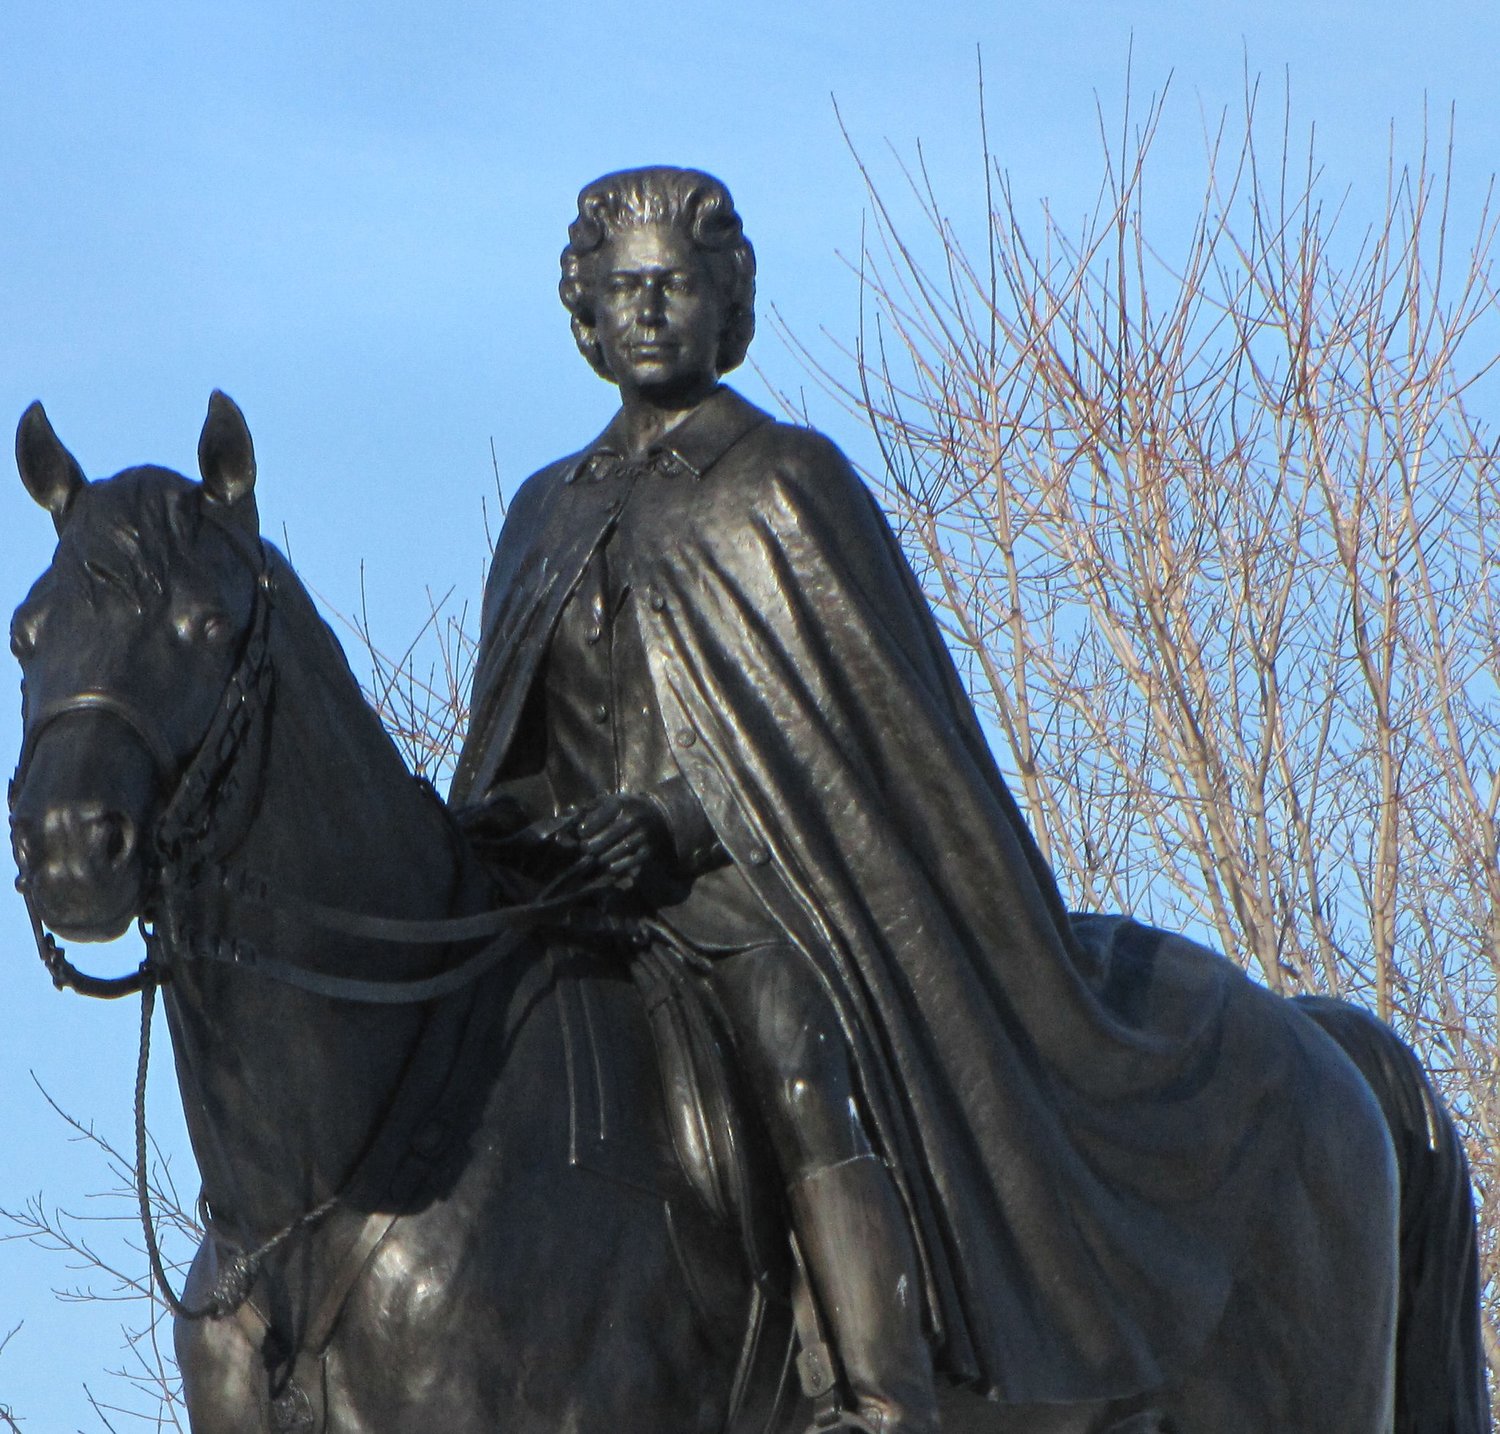 Statue of Queen Elizabeth on horse, Parliament Hill, Ottawa, Ontario